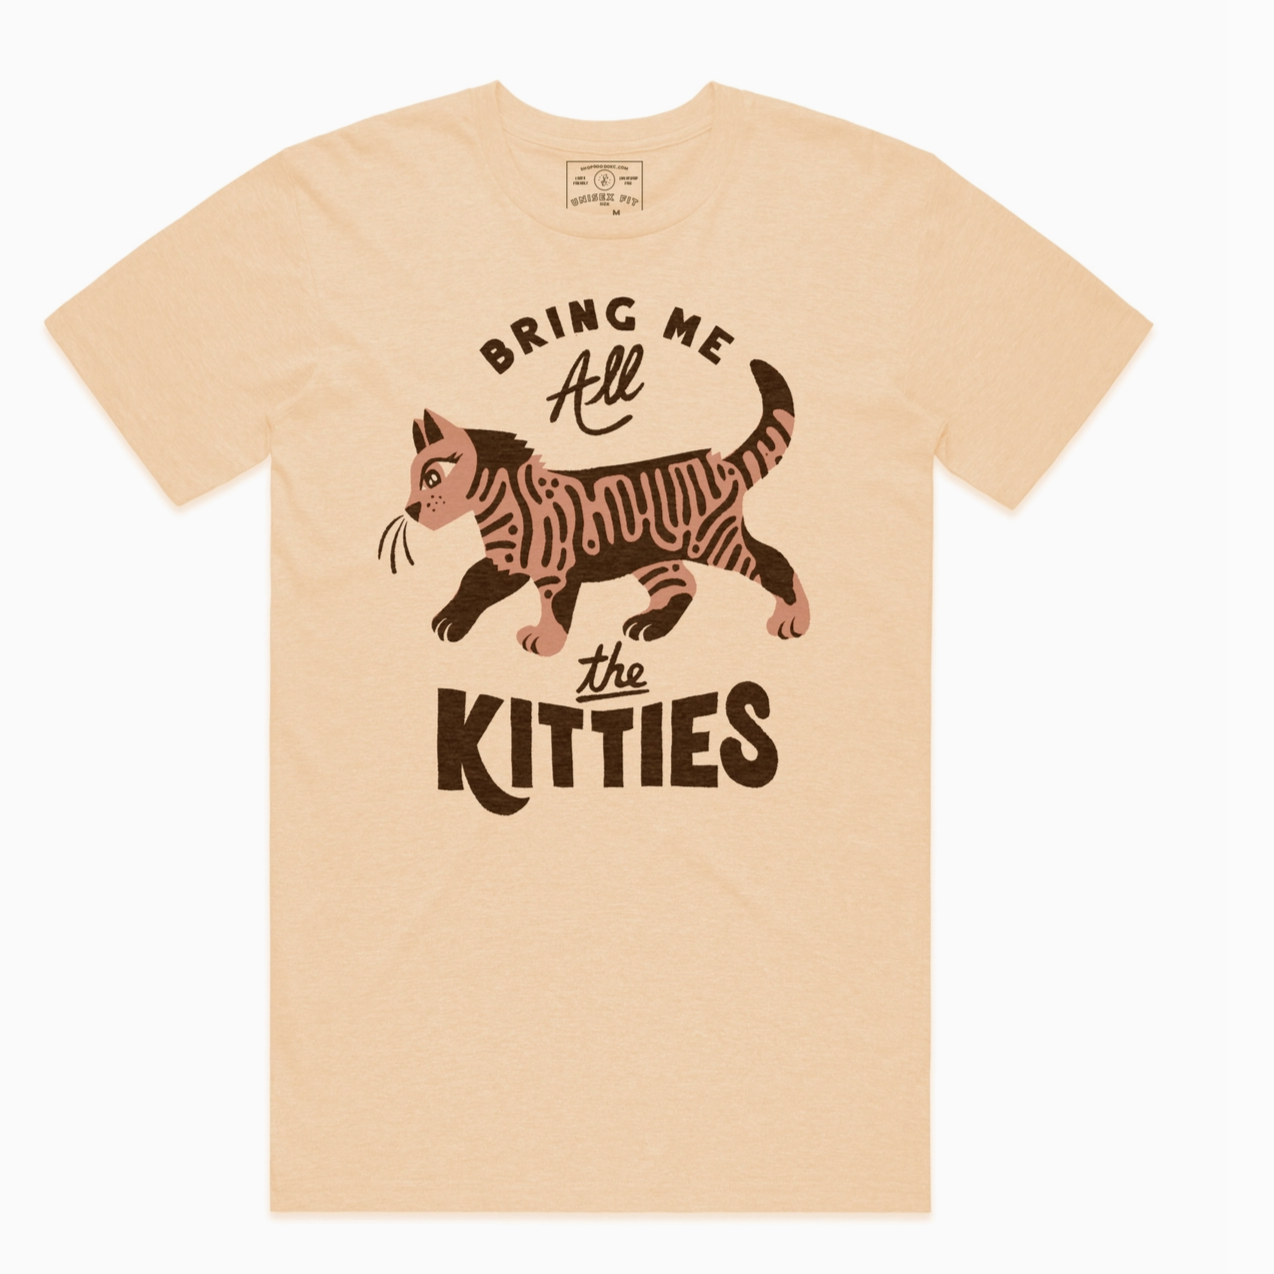 Bring Me All The Kitties Unisex Tee